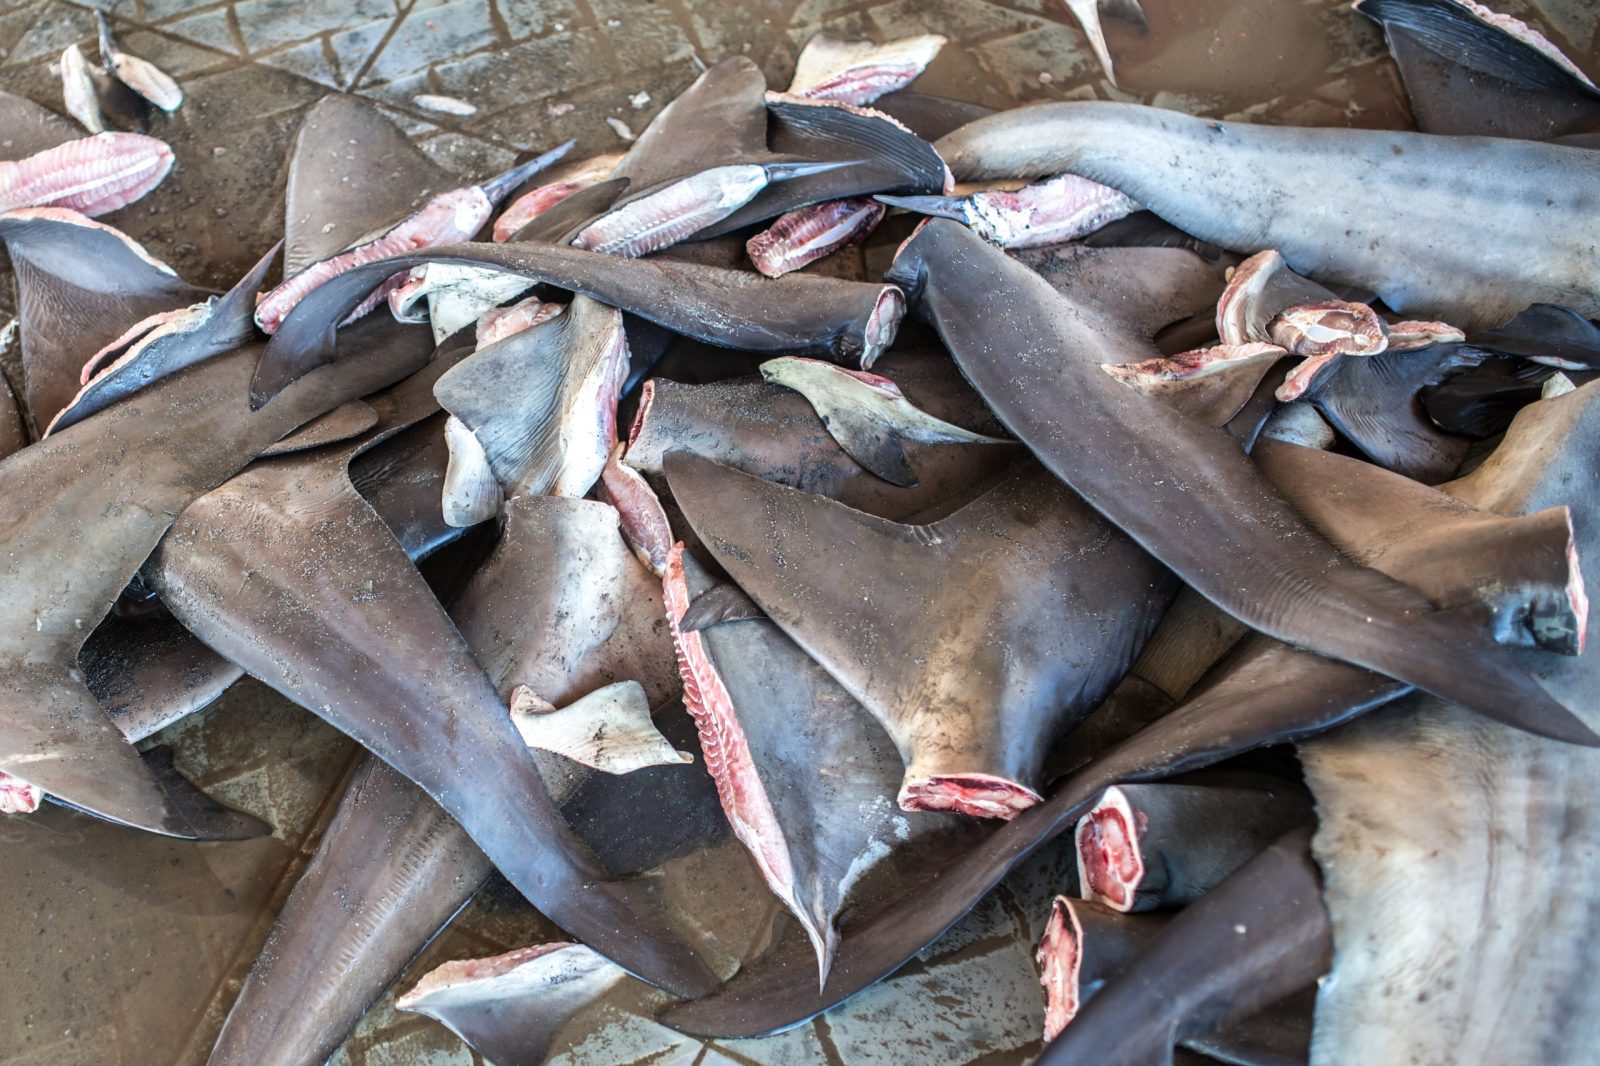 Pile of illegal shark fins